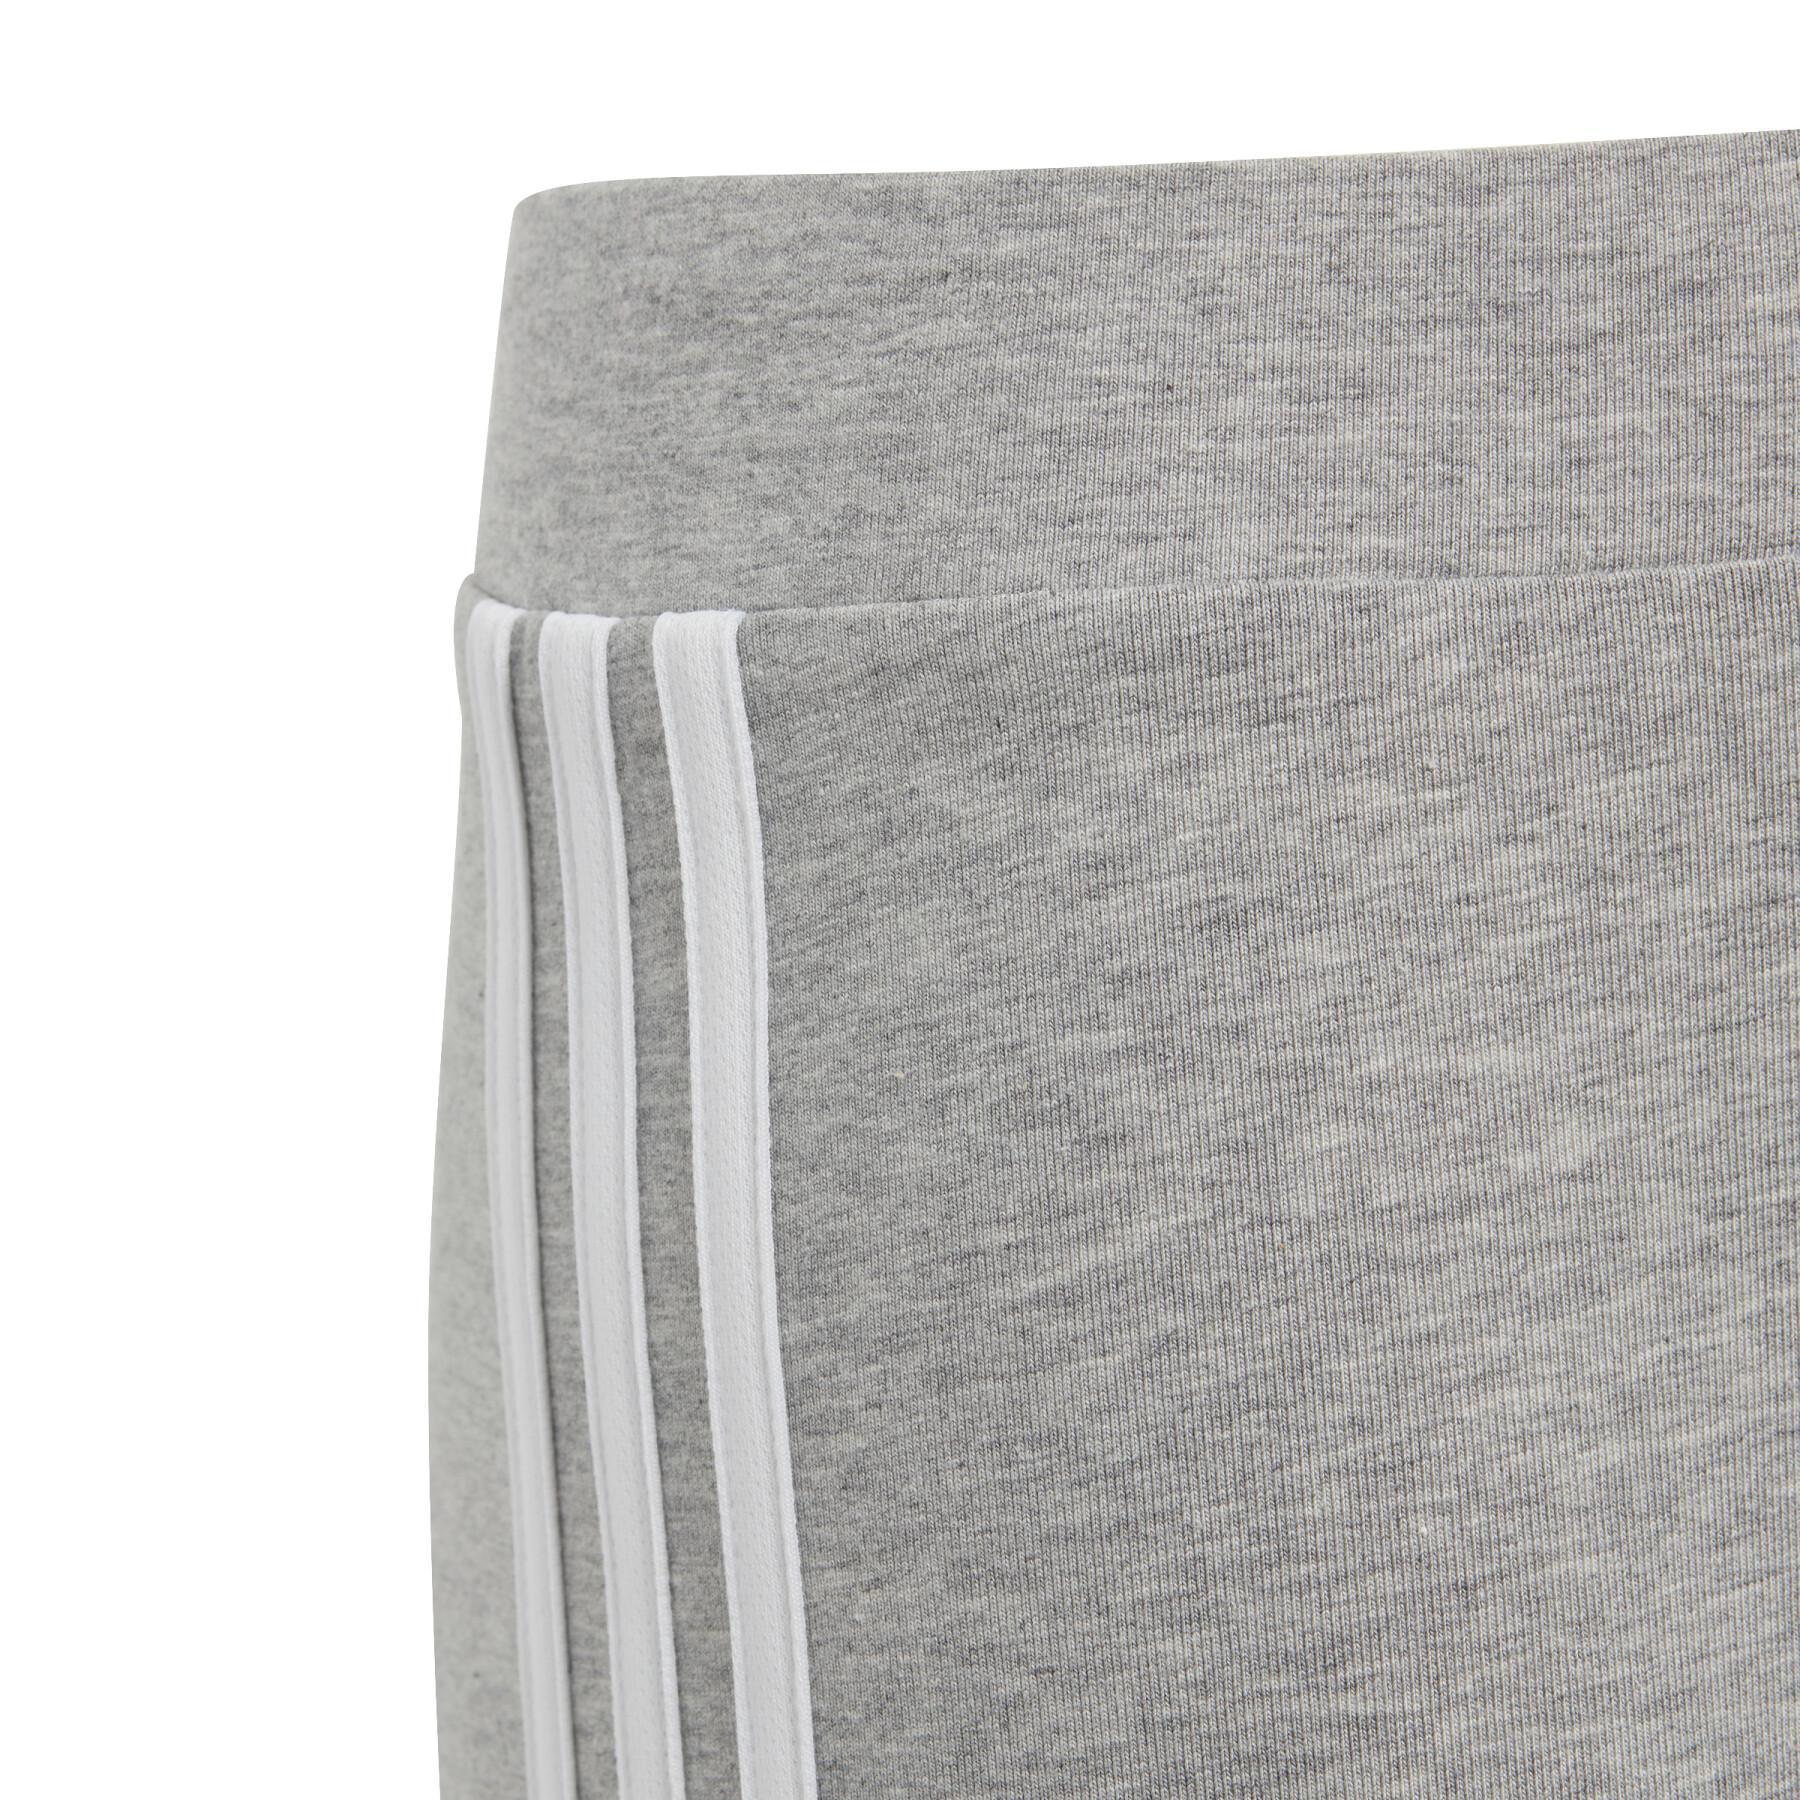 Legging en coton fille adidas 3-Stripes Essentials